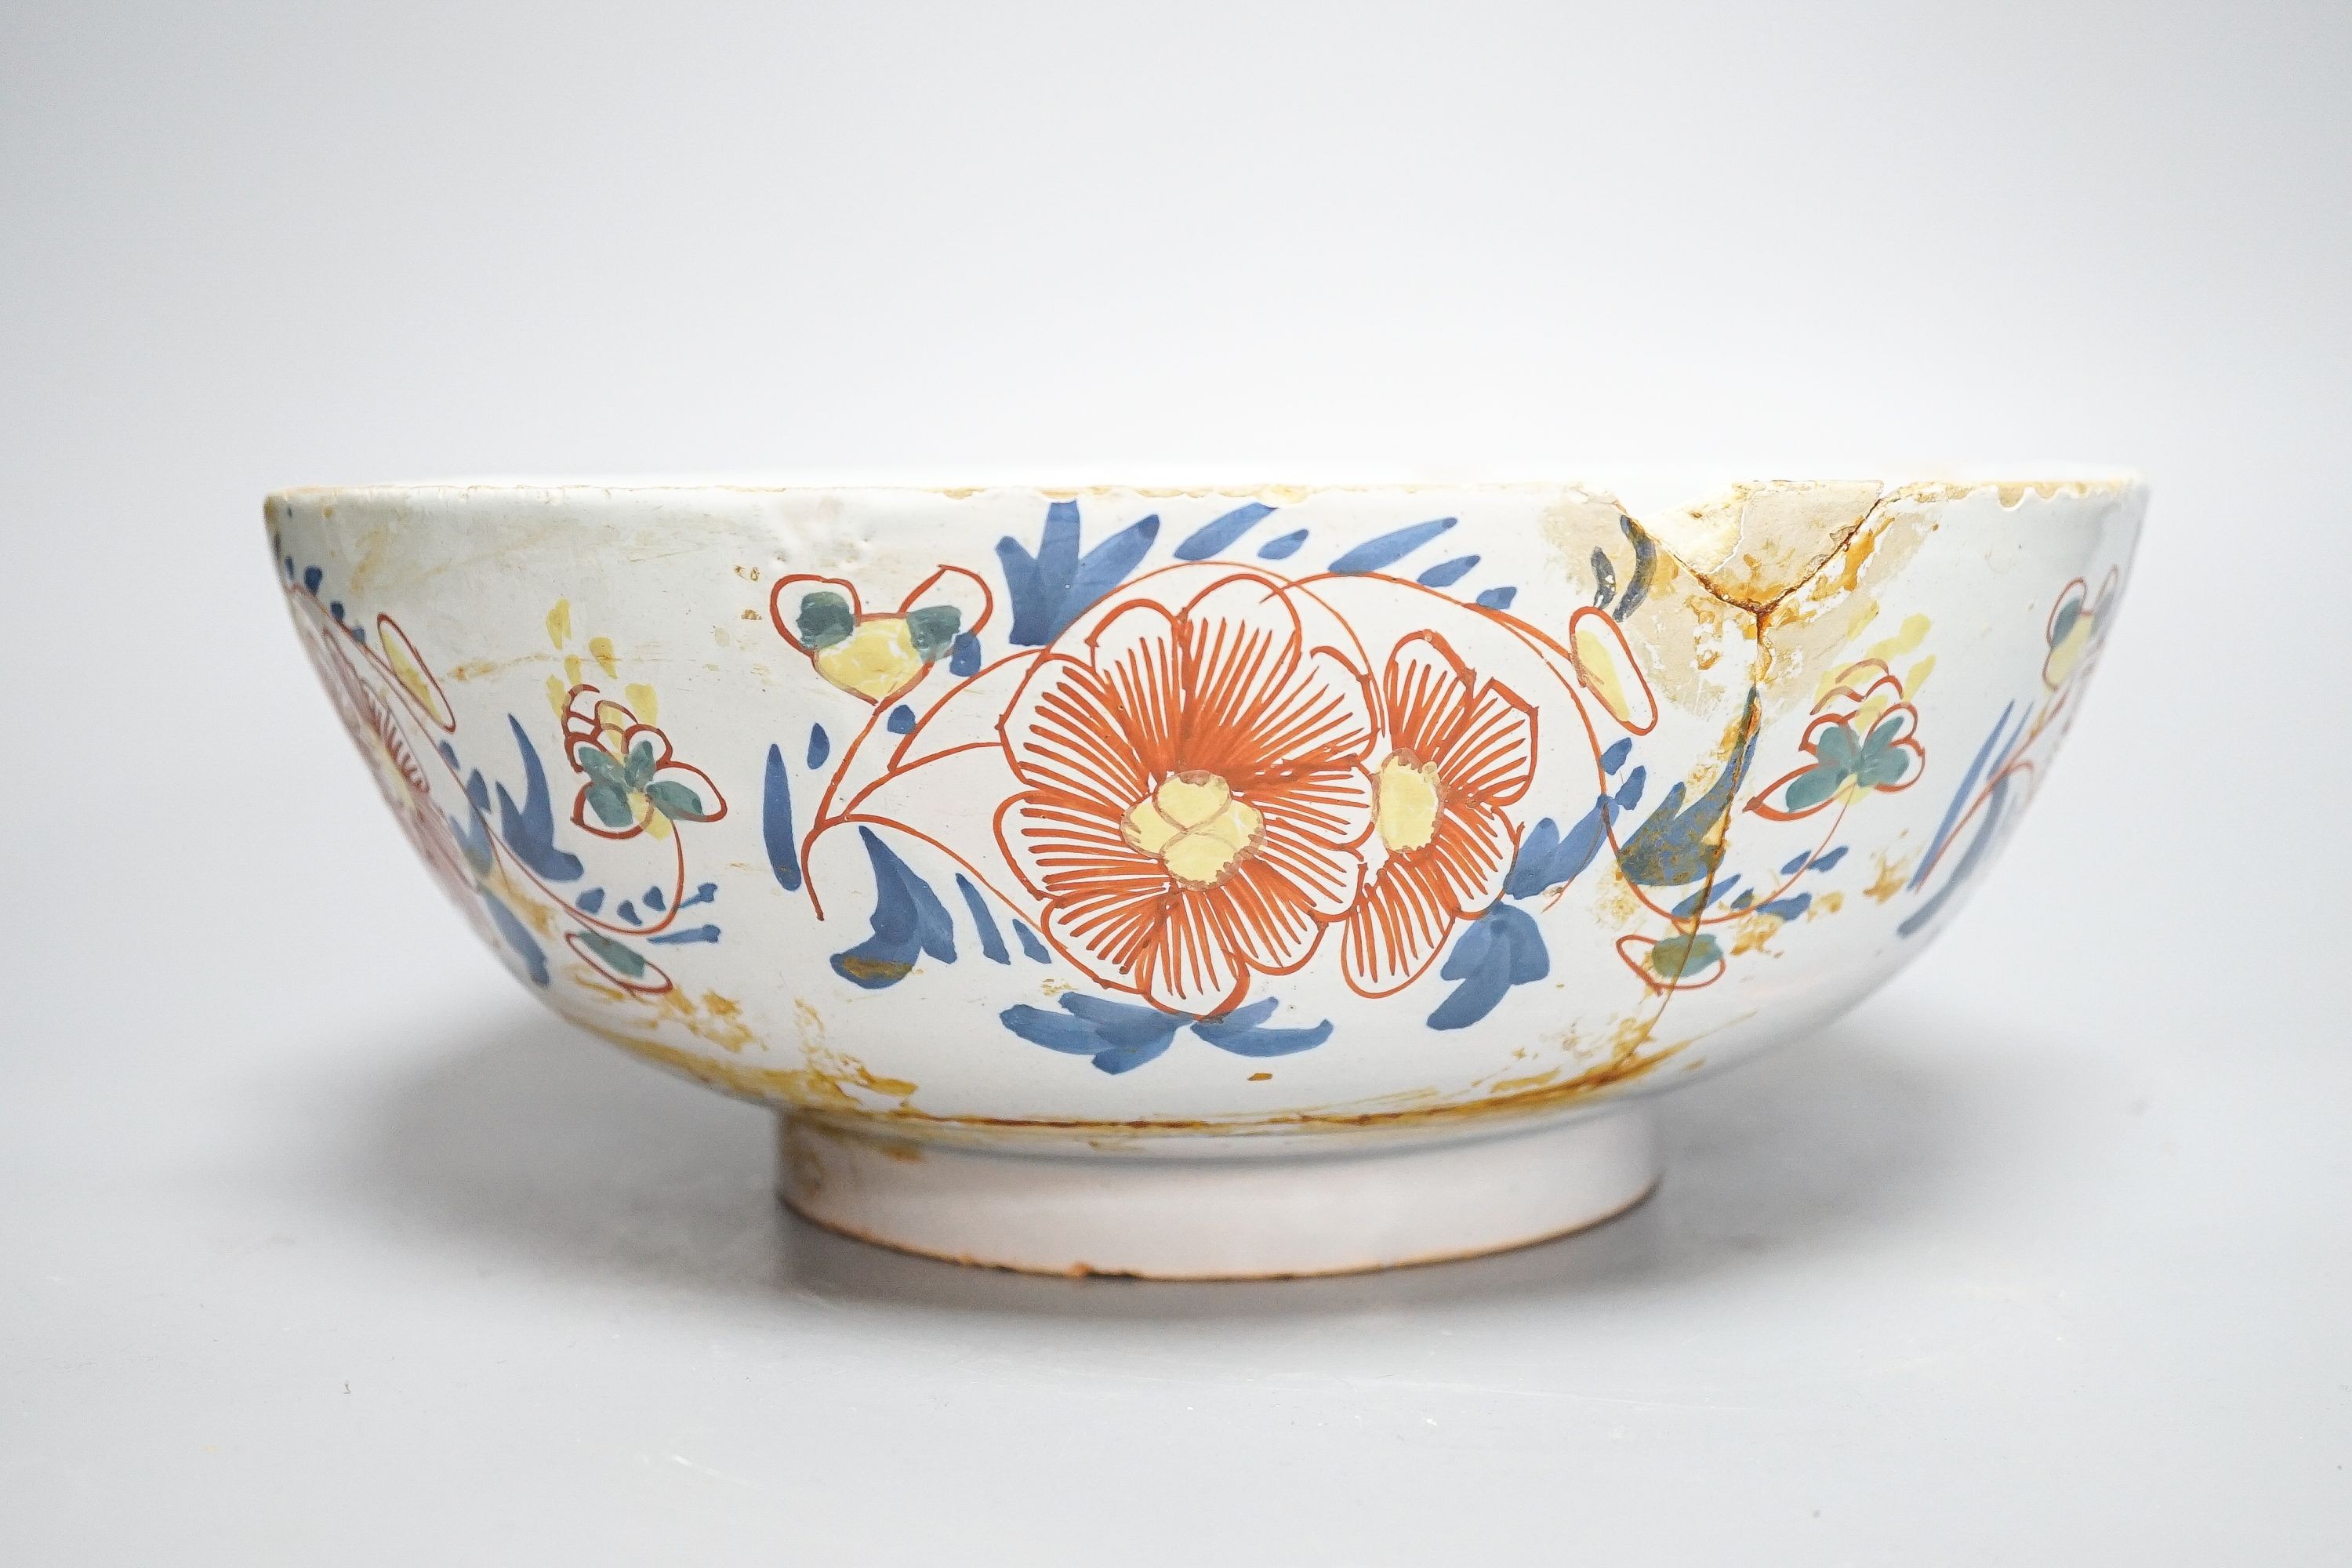 An 18th century English polychrome delftware bowl, interior inscribed 